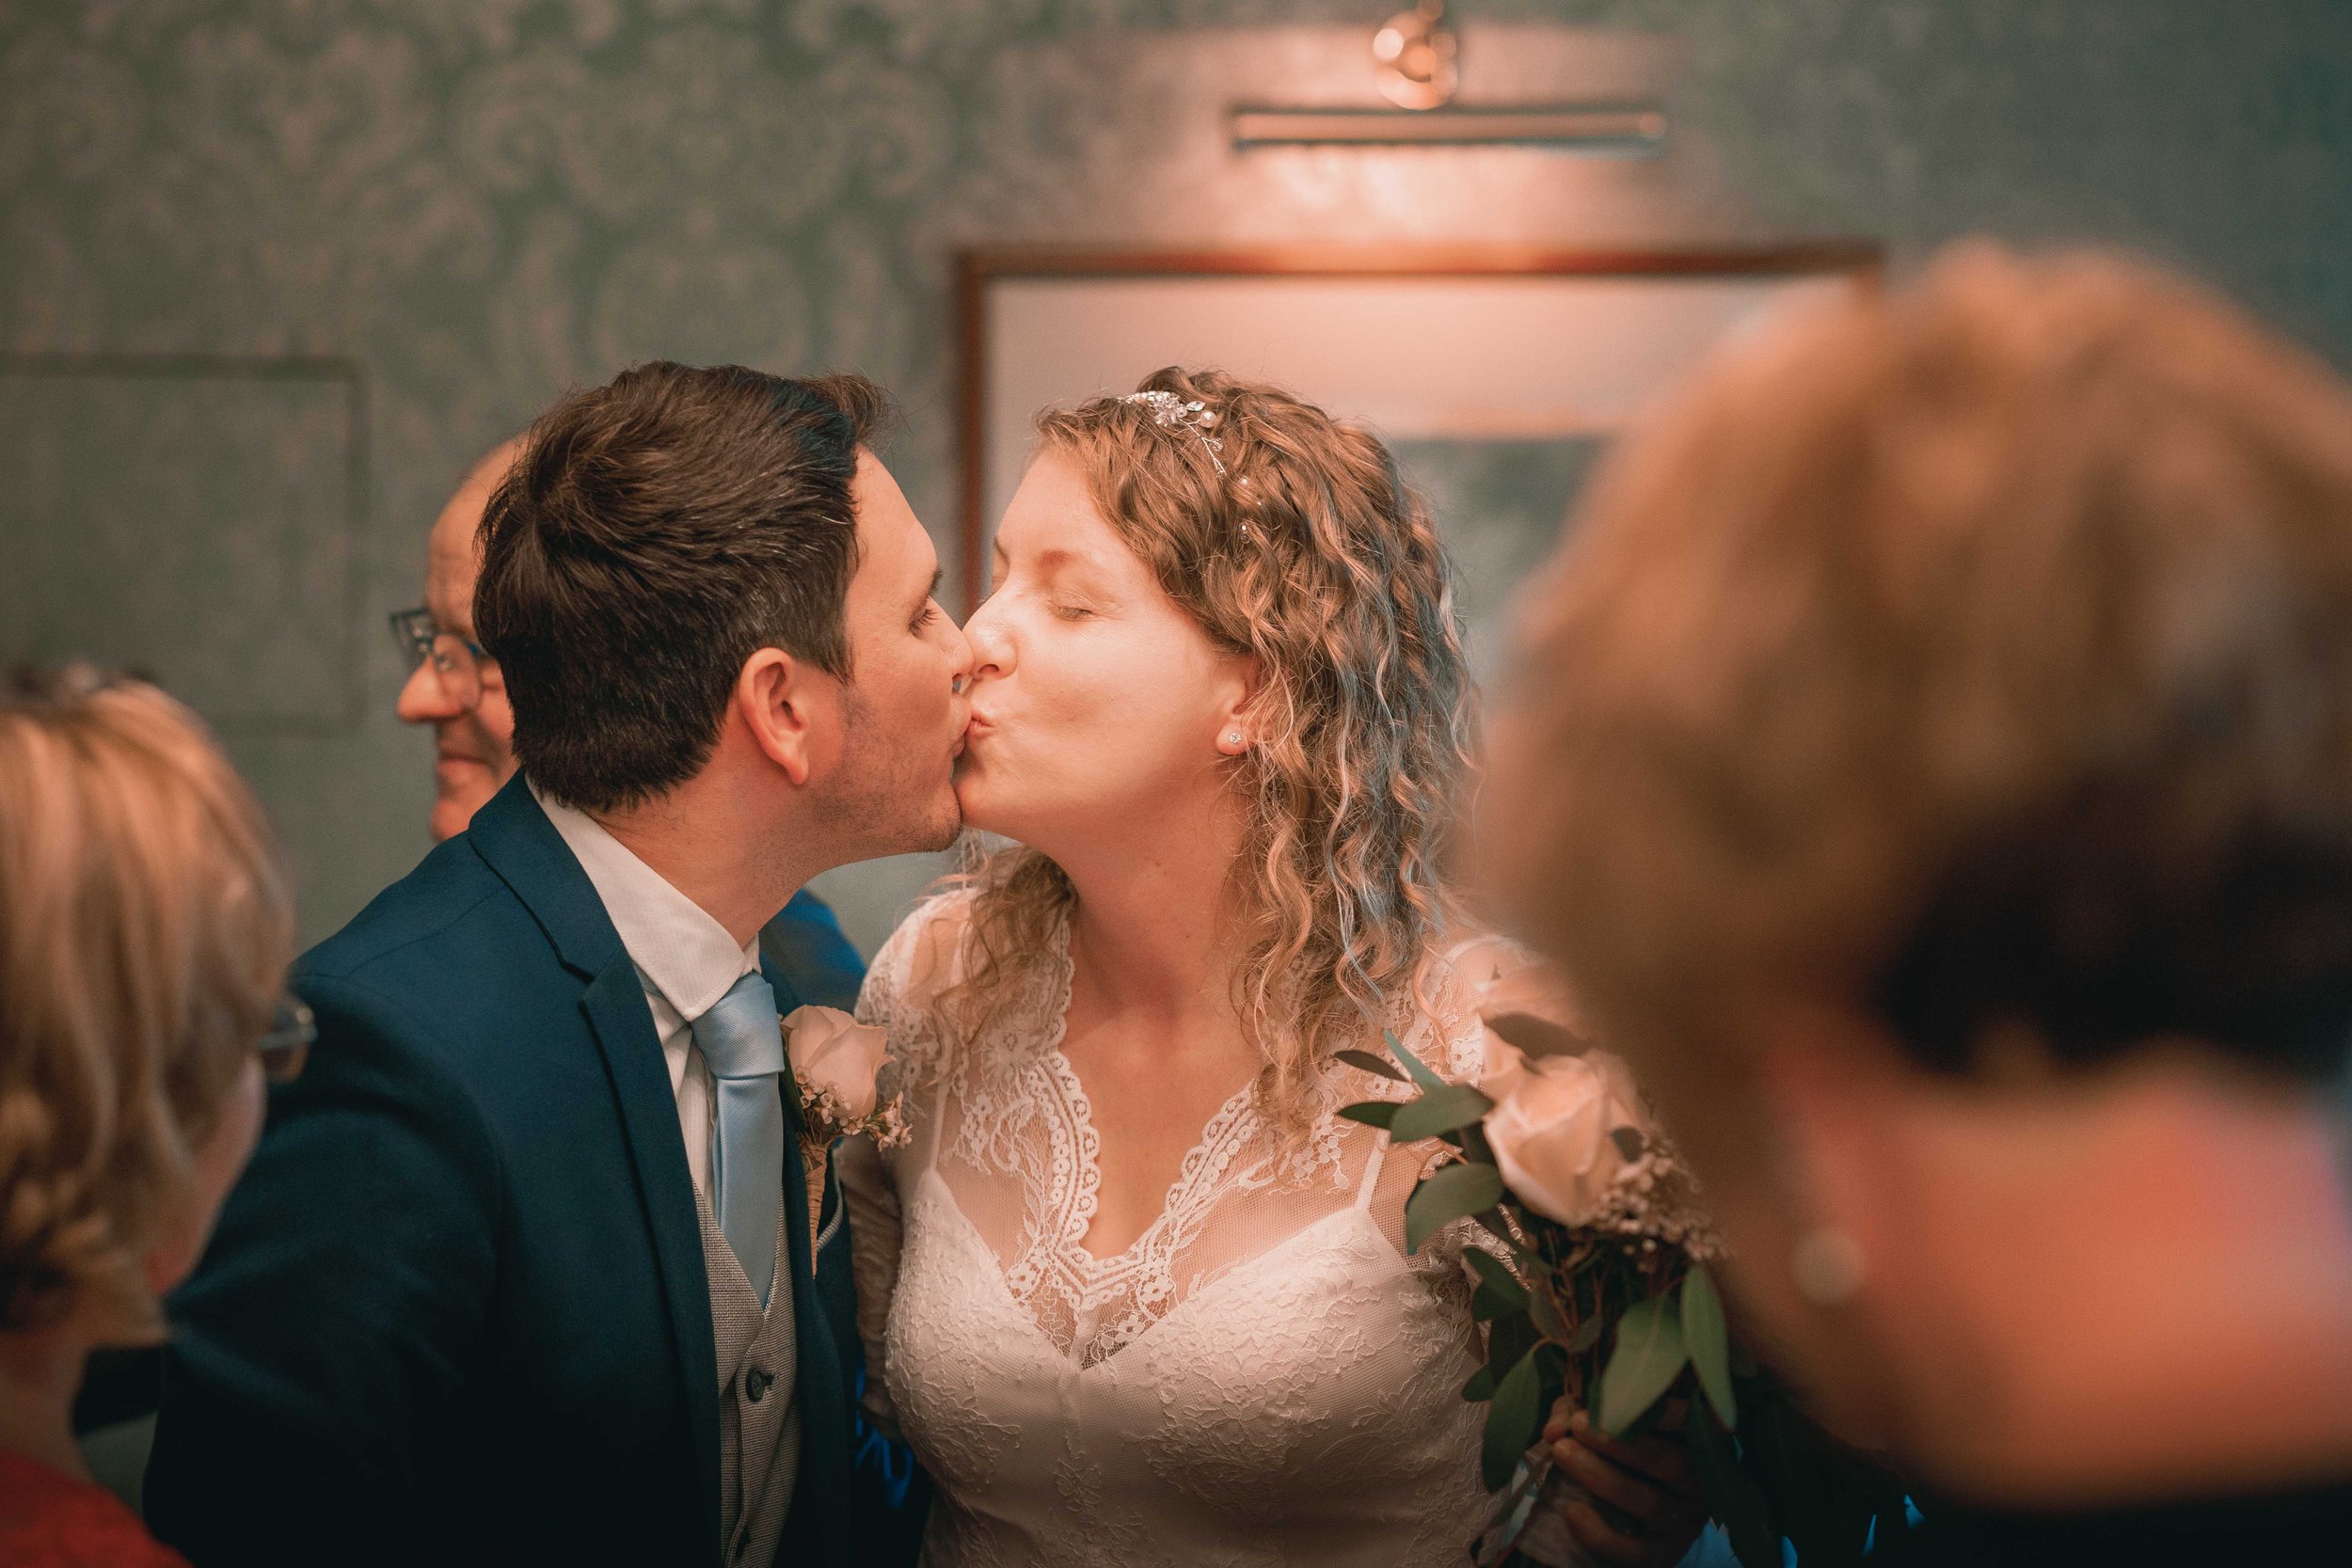 Christopher_James_Photography_Bride_&_groom_outdoor_wedding_under_Ghan_house_bride_&Groom_kissing.jpg